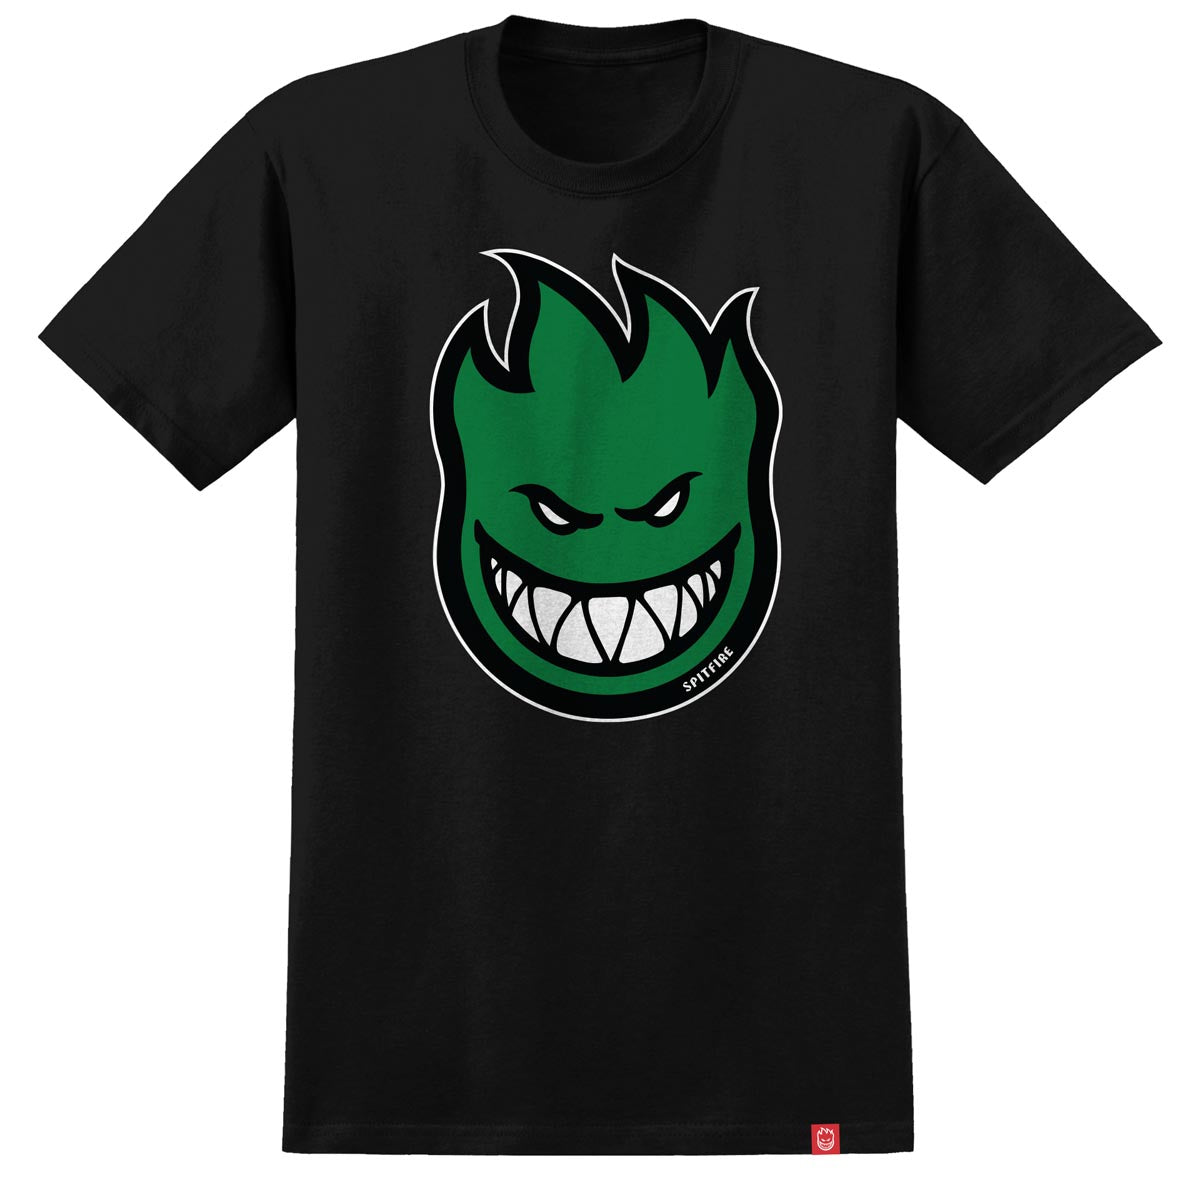 Spitfire Bighead Fill T-Shirt - Black/Green/Black/White image 1